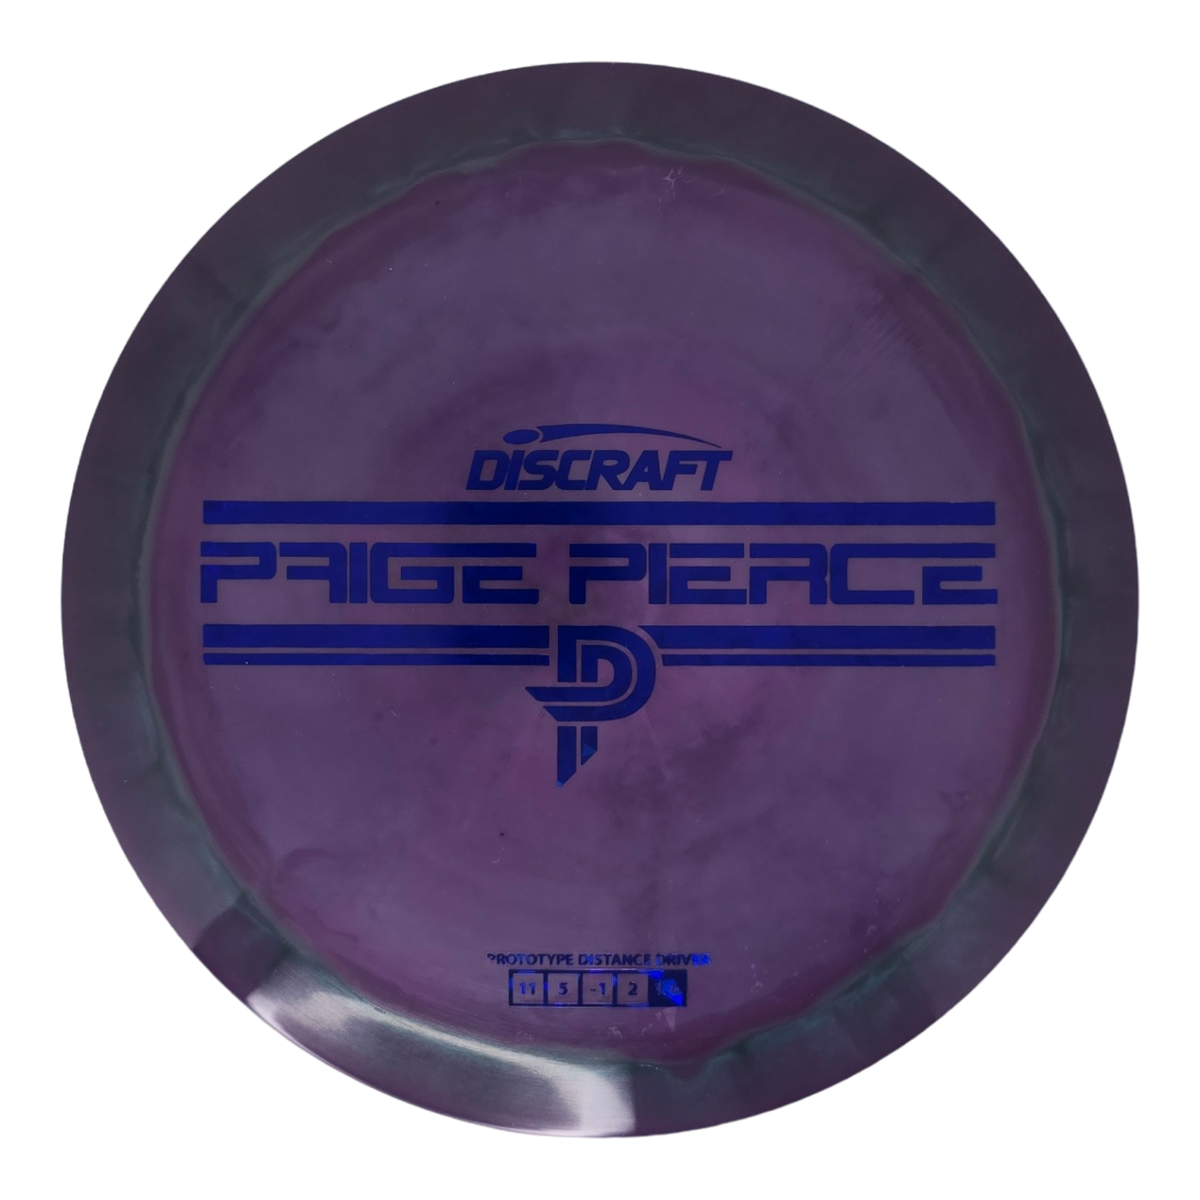 Discraft Paige Pierce ESP Drive - Prototype